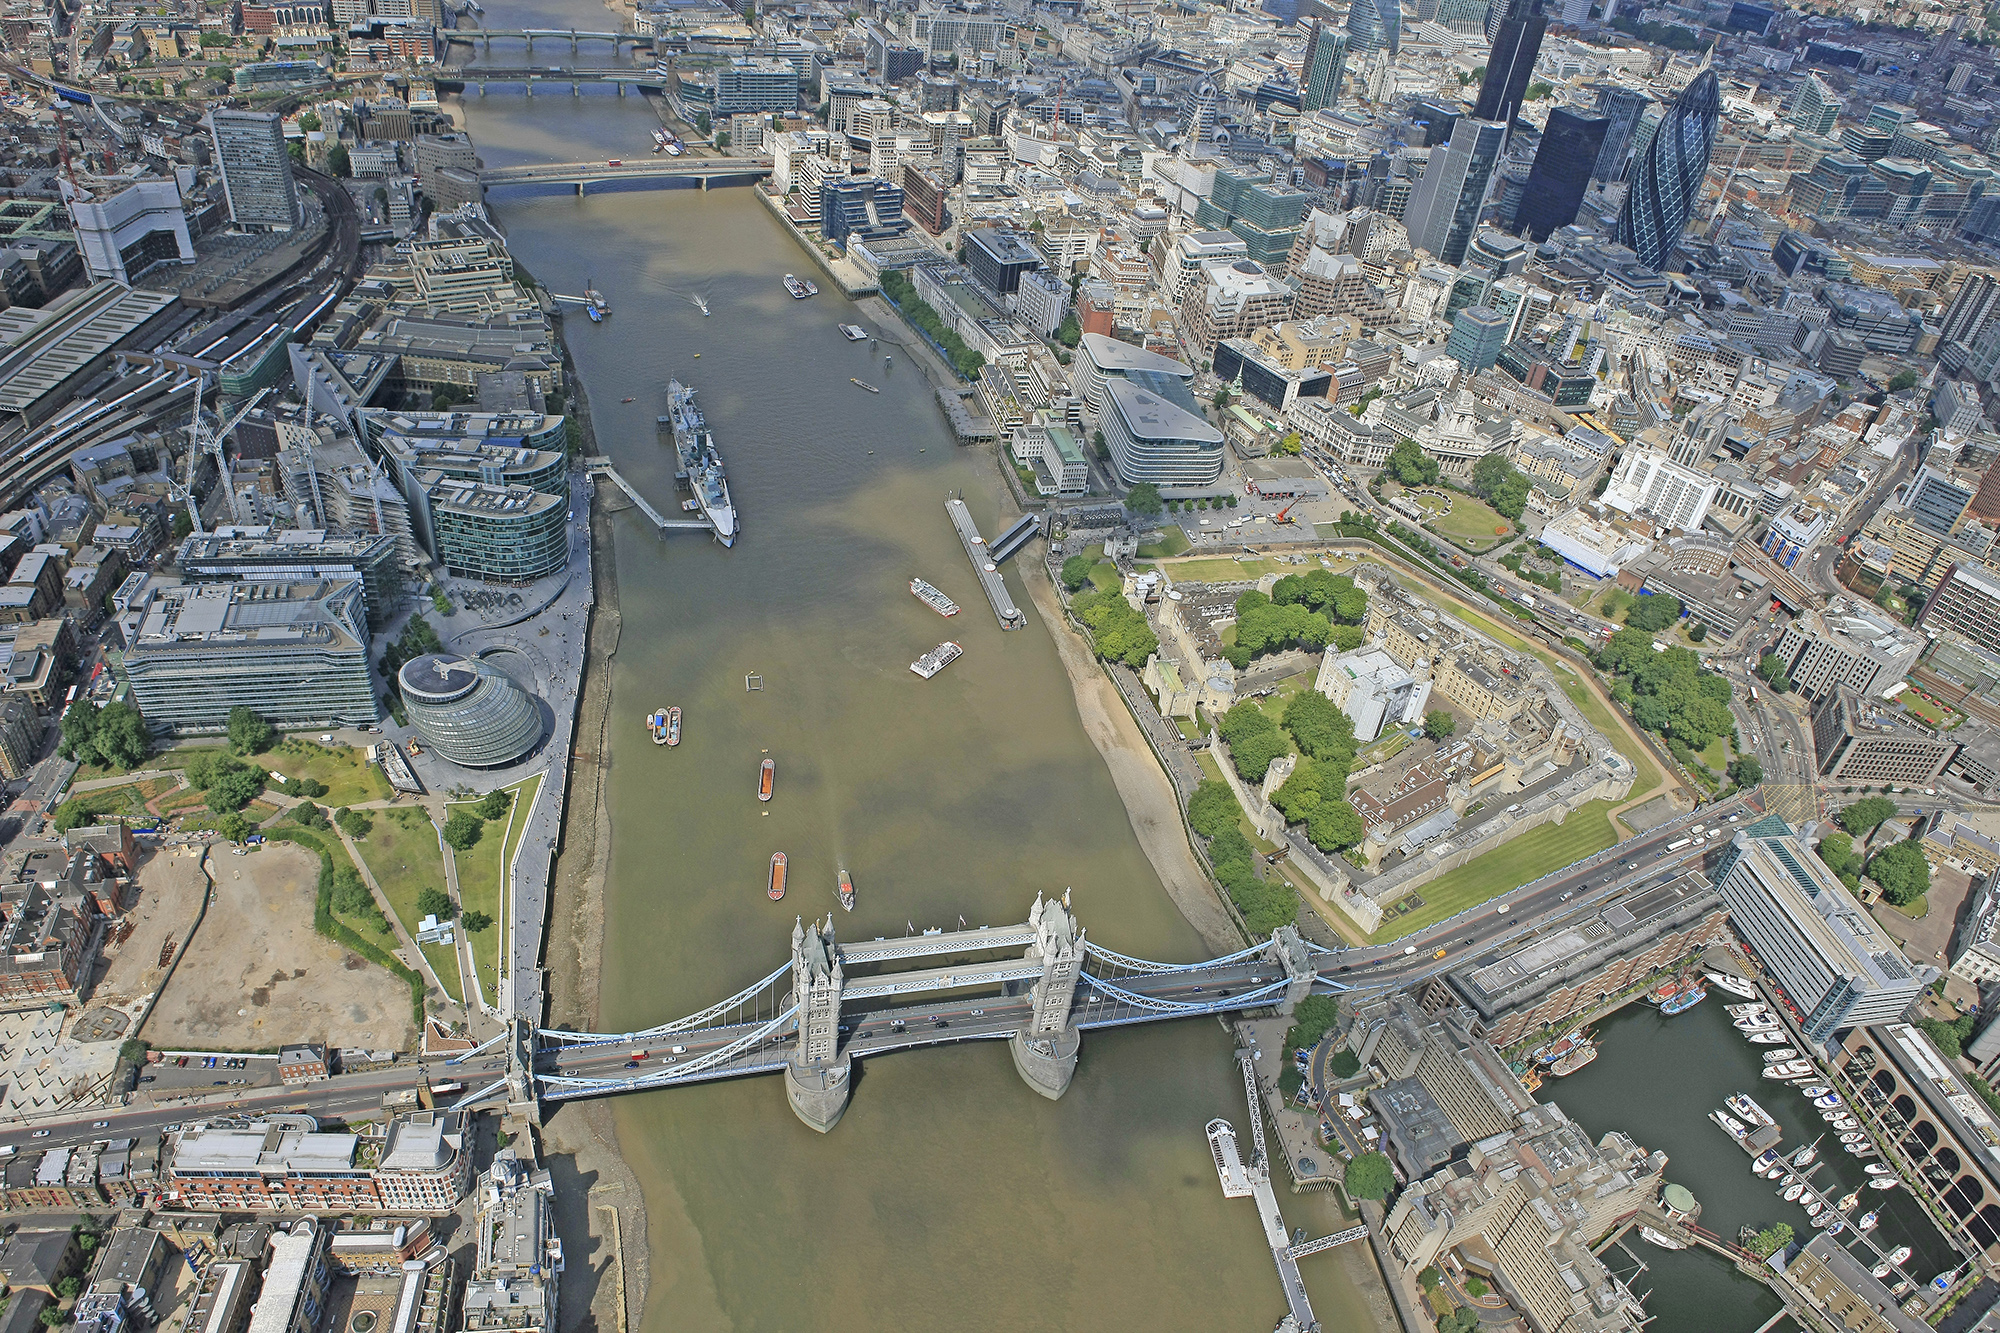 Tower Bridge and London Bridge